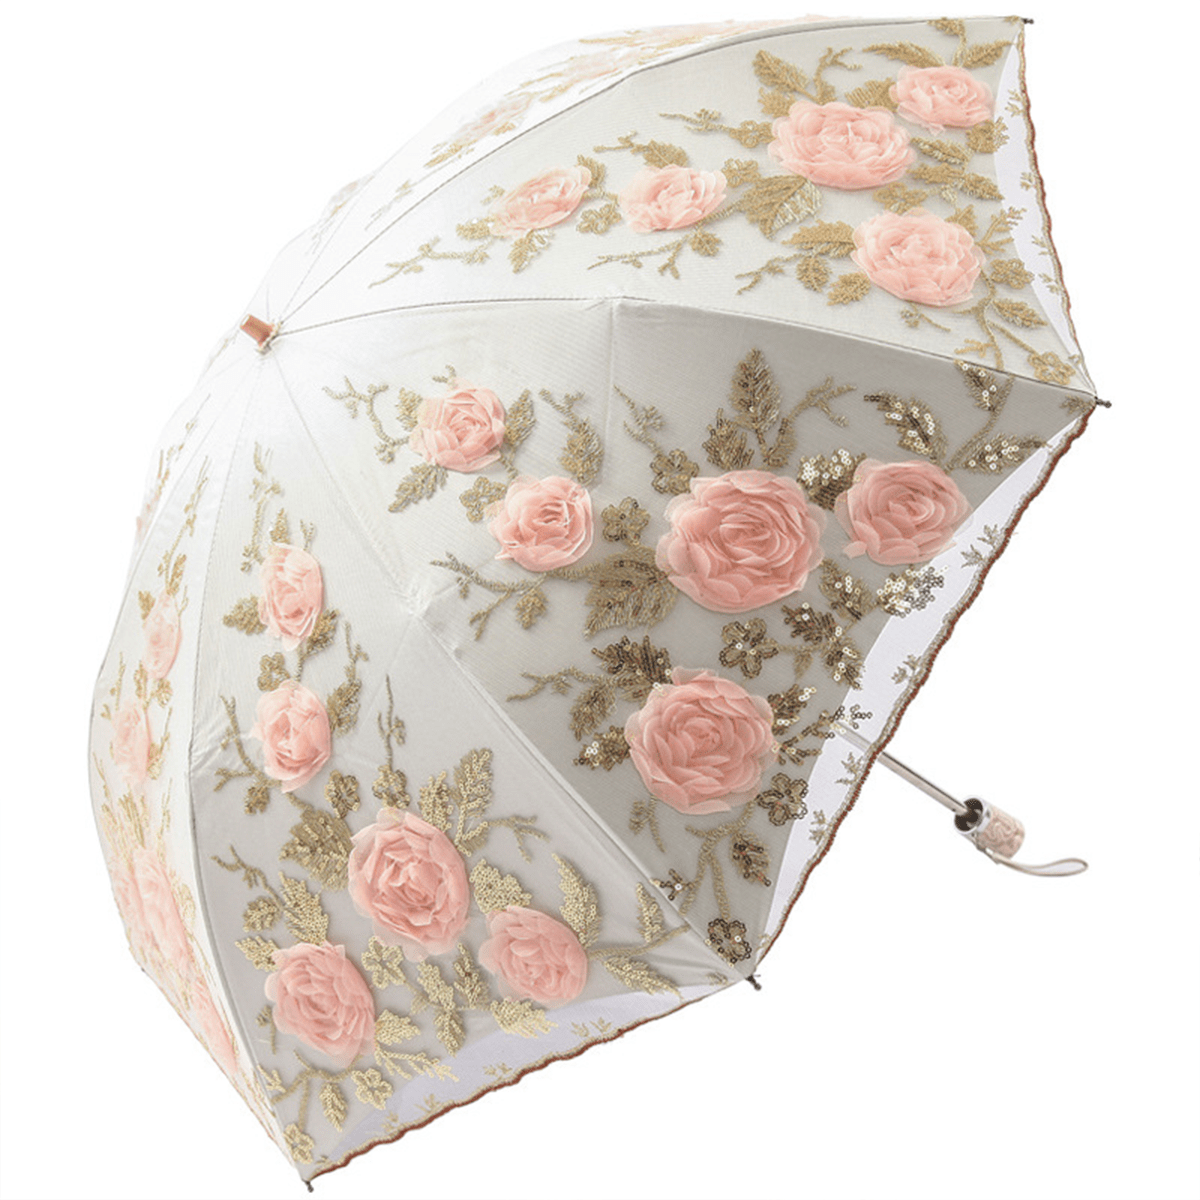 Windproof Travel parasol